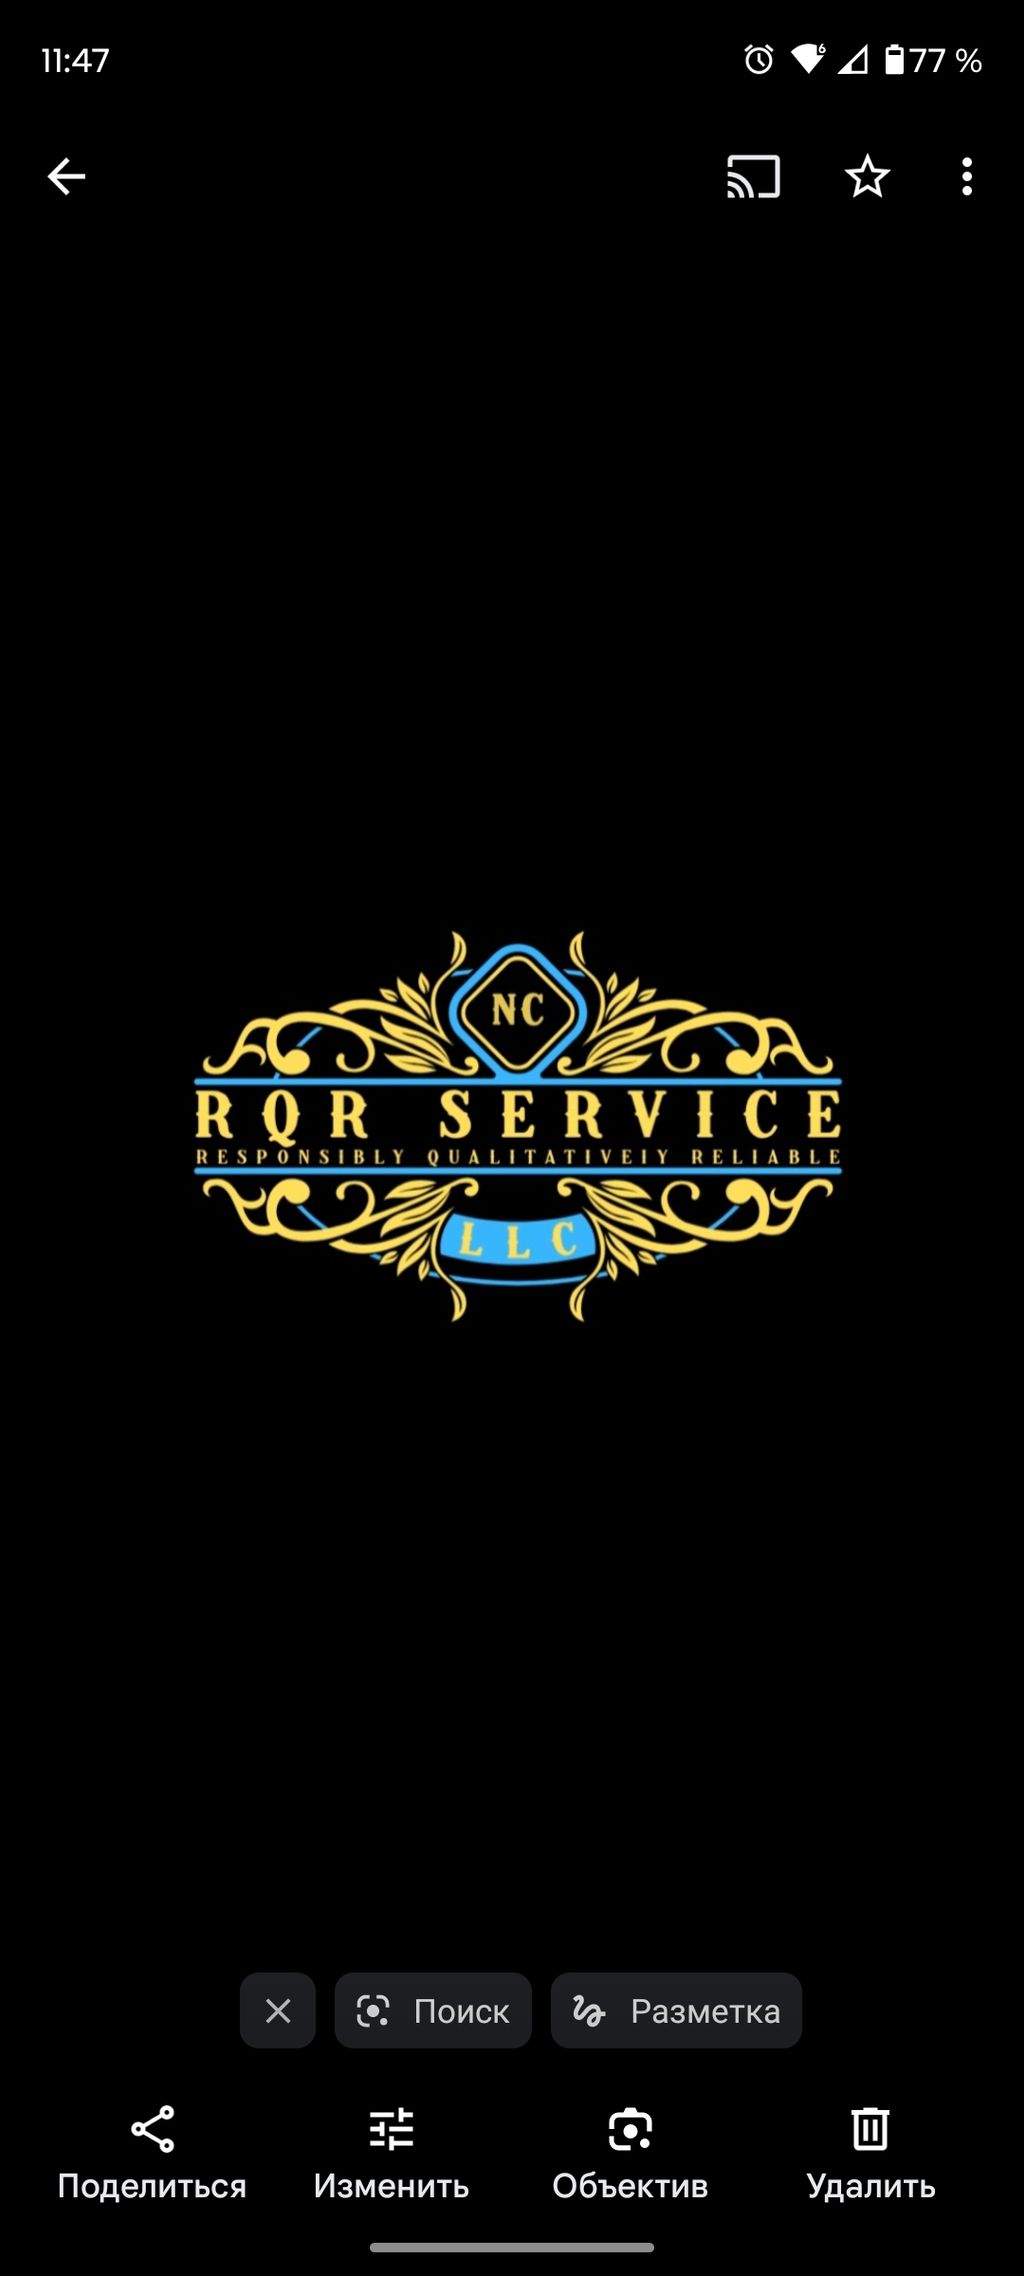 RQR Service LLC